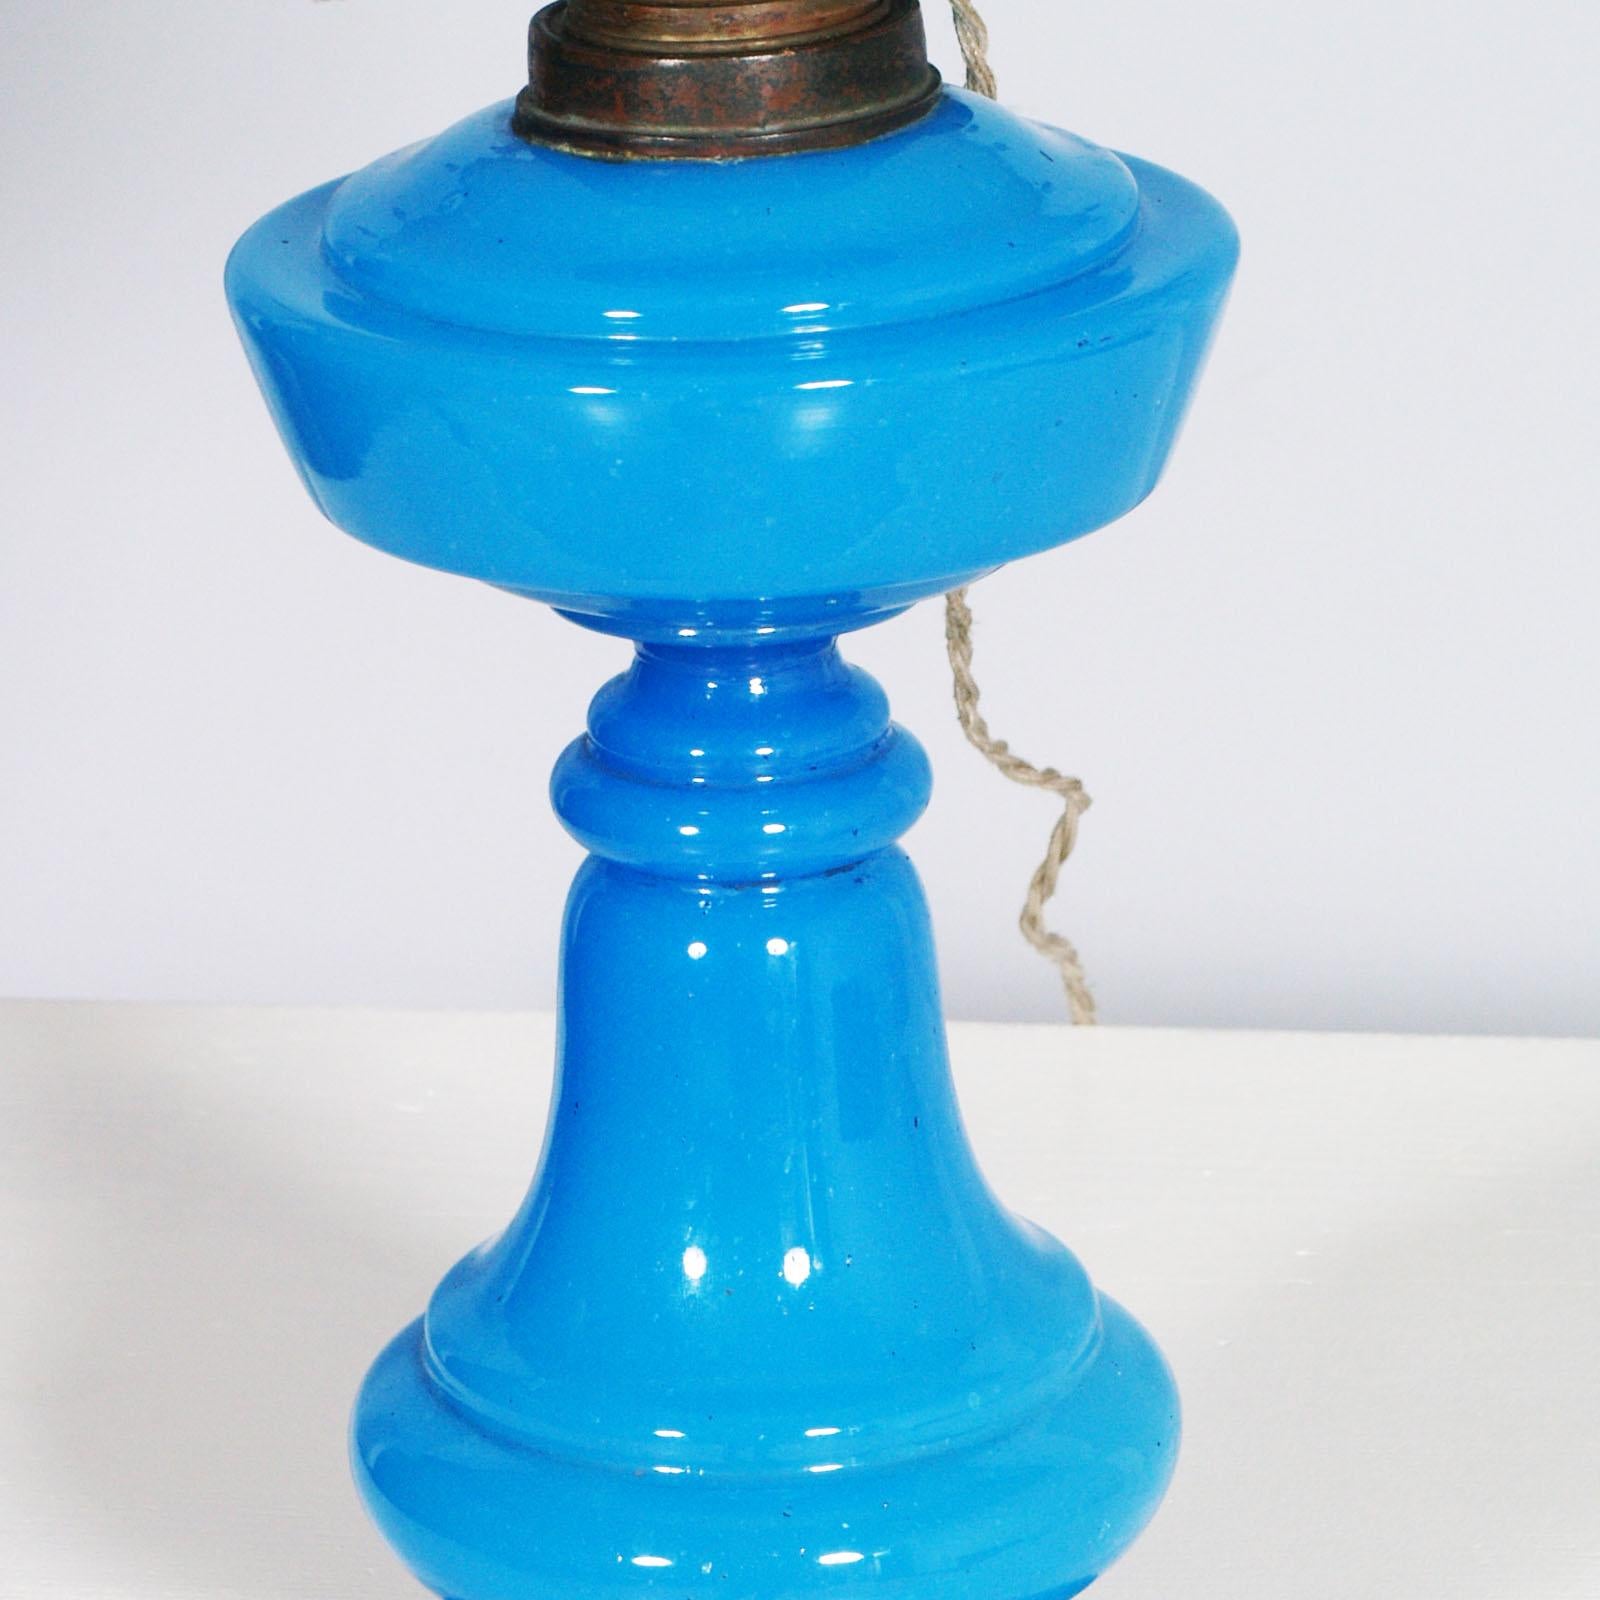 Art Deco Murano Glass Table Lamp by Cappellin for Venini 1930 Blown Blue Glass In Good Condition For Sale In Vigonza, Padua